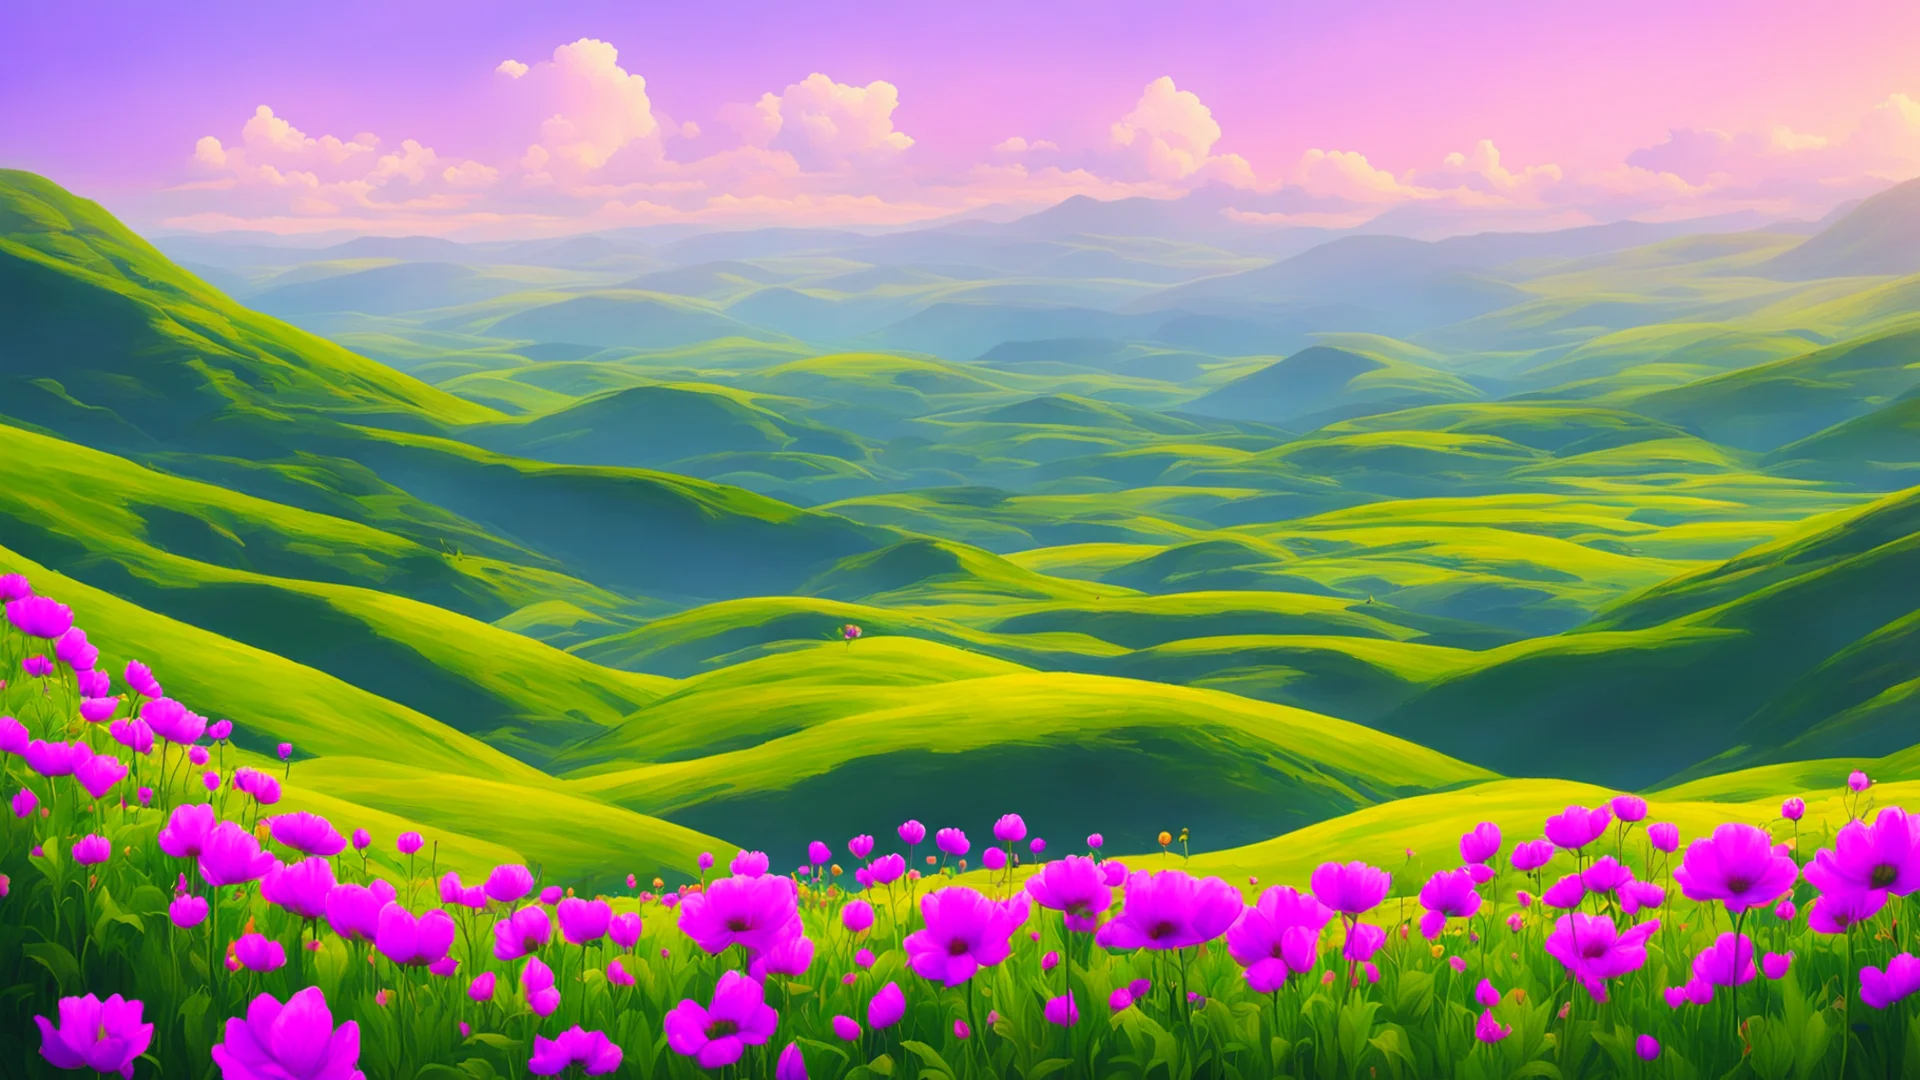 beautiful scenery amazing land peaceful lowfi flowers hills good looking trending fantastic 1 wide